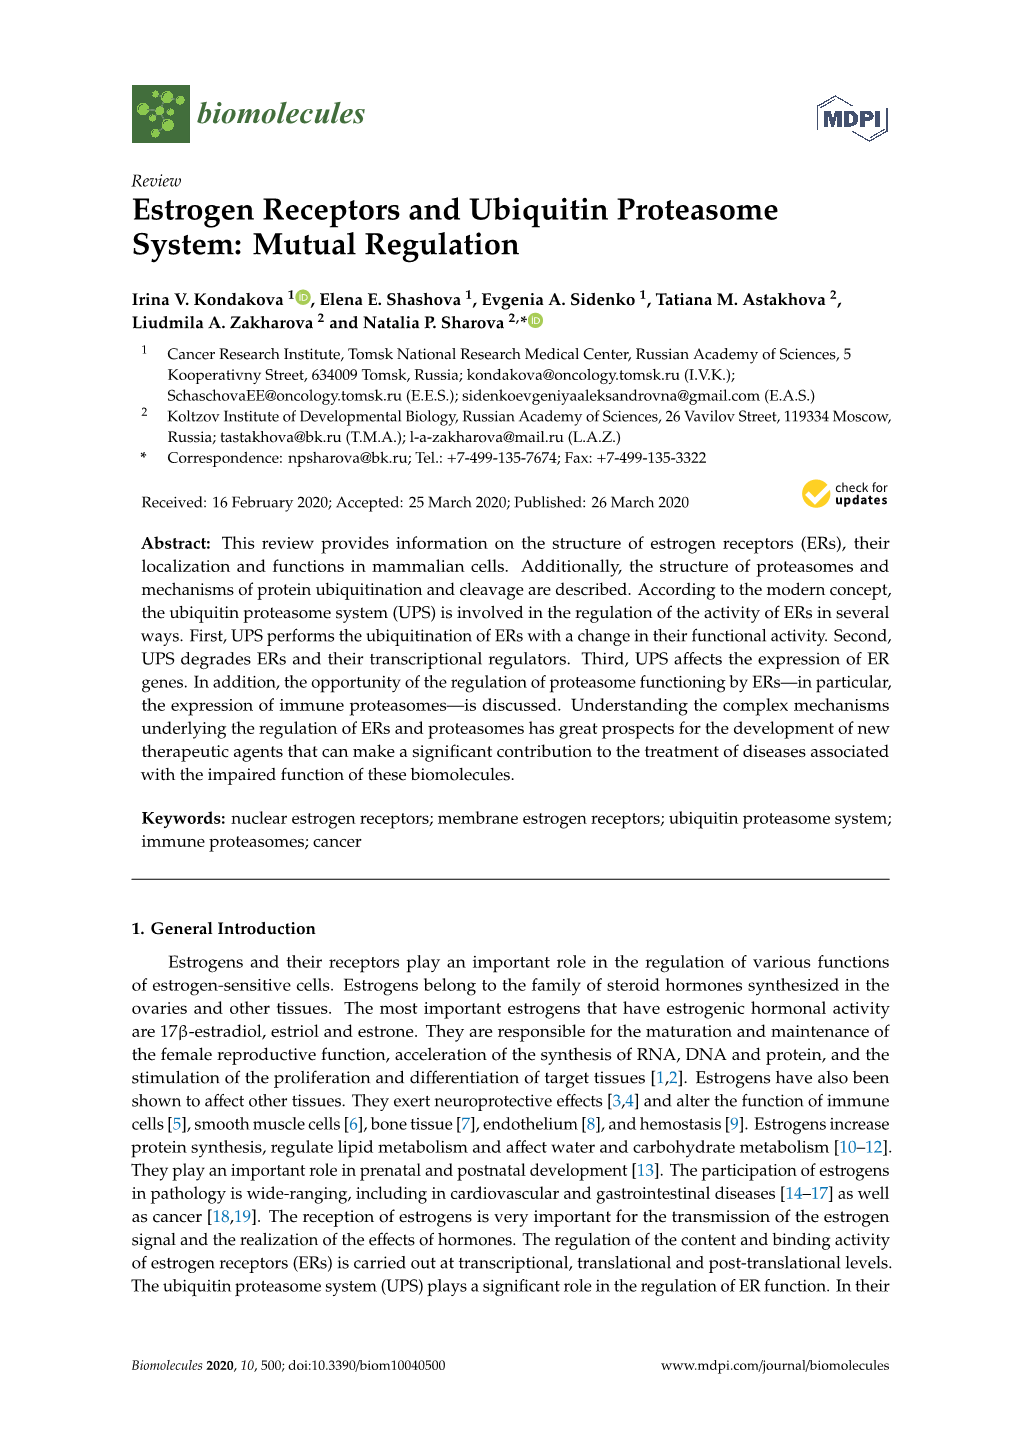 Estrogen Receptors and Ubiquitin Proteasome System: Mutual Regulation